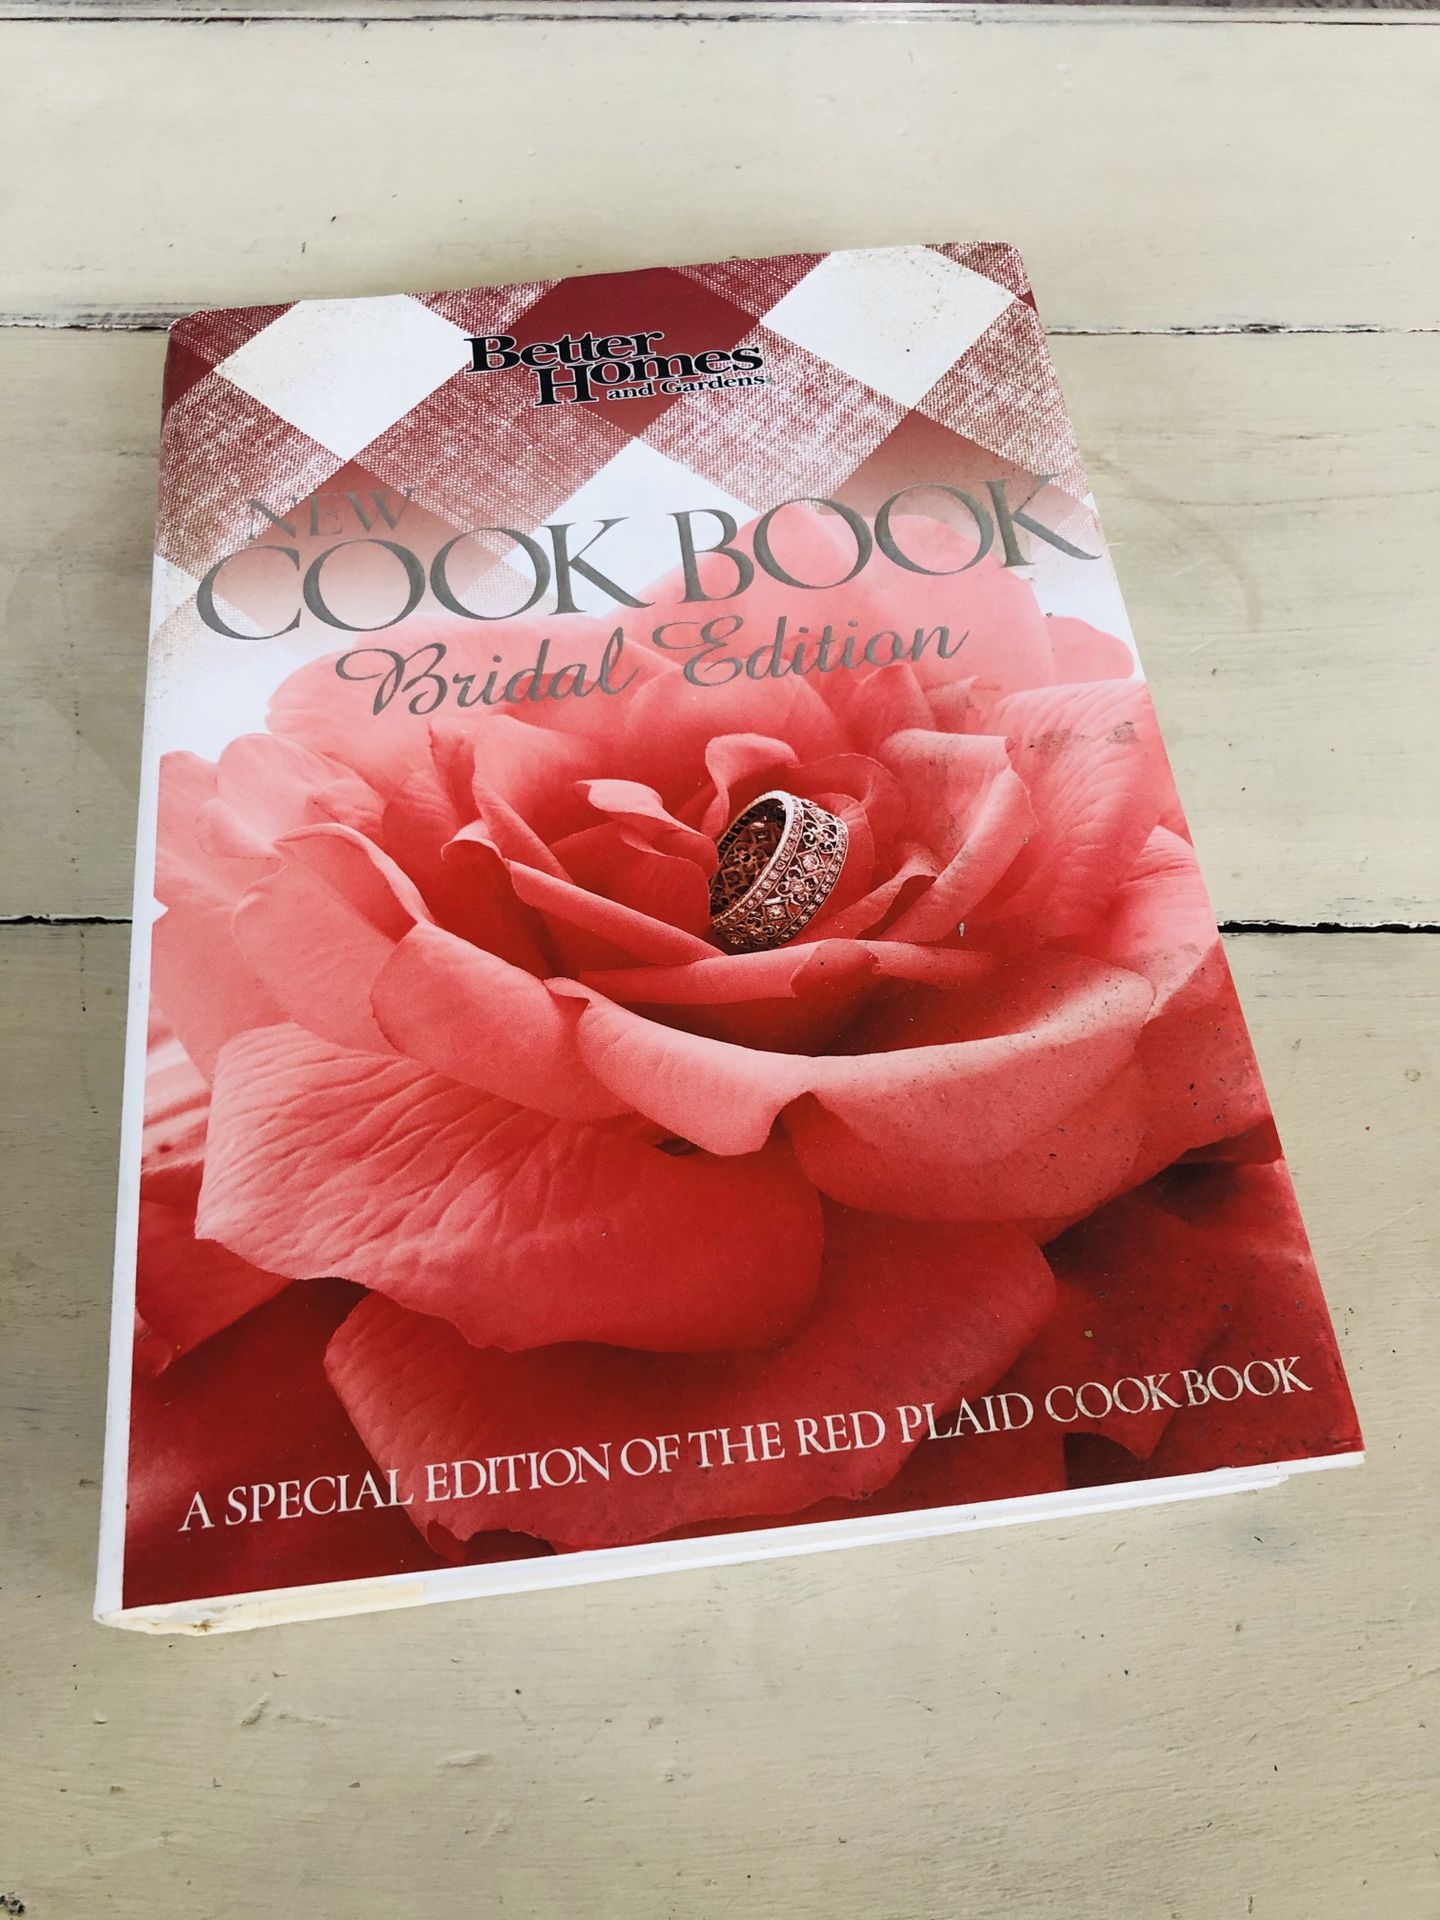 Bridal edition cook book